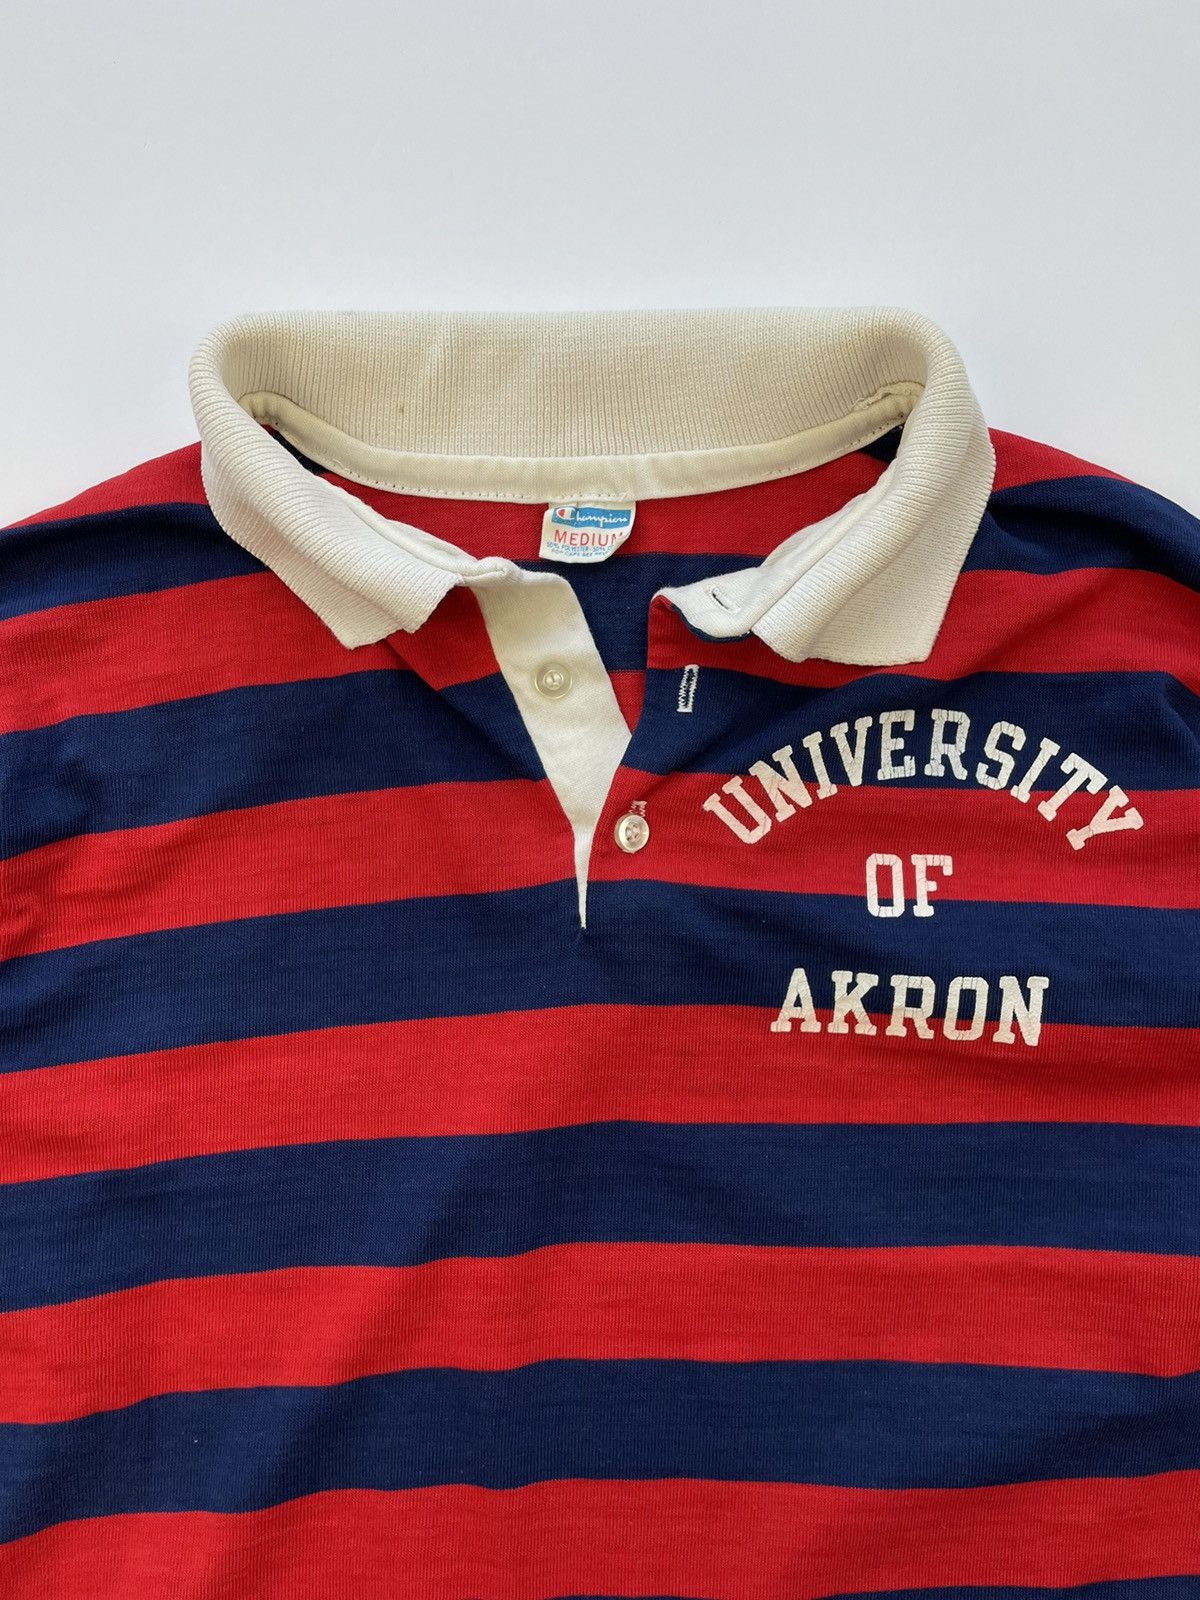 Vintage Vintage 80s Champion University Of Akron Long Sleeve Polo Size US M / EU 48-50 / 2 - 2 Preview